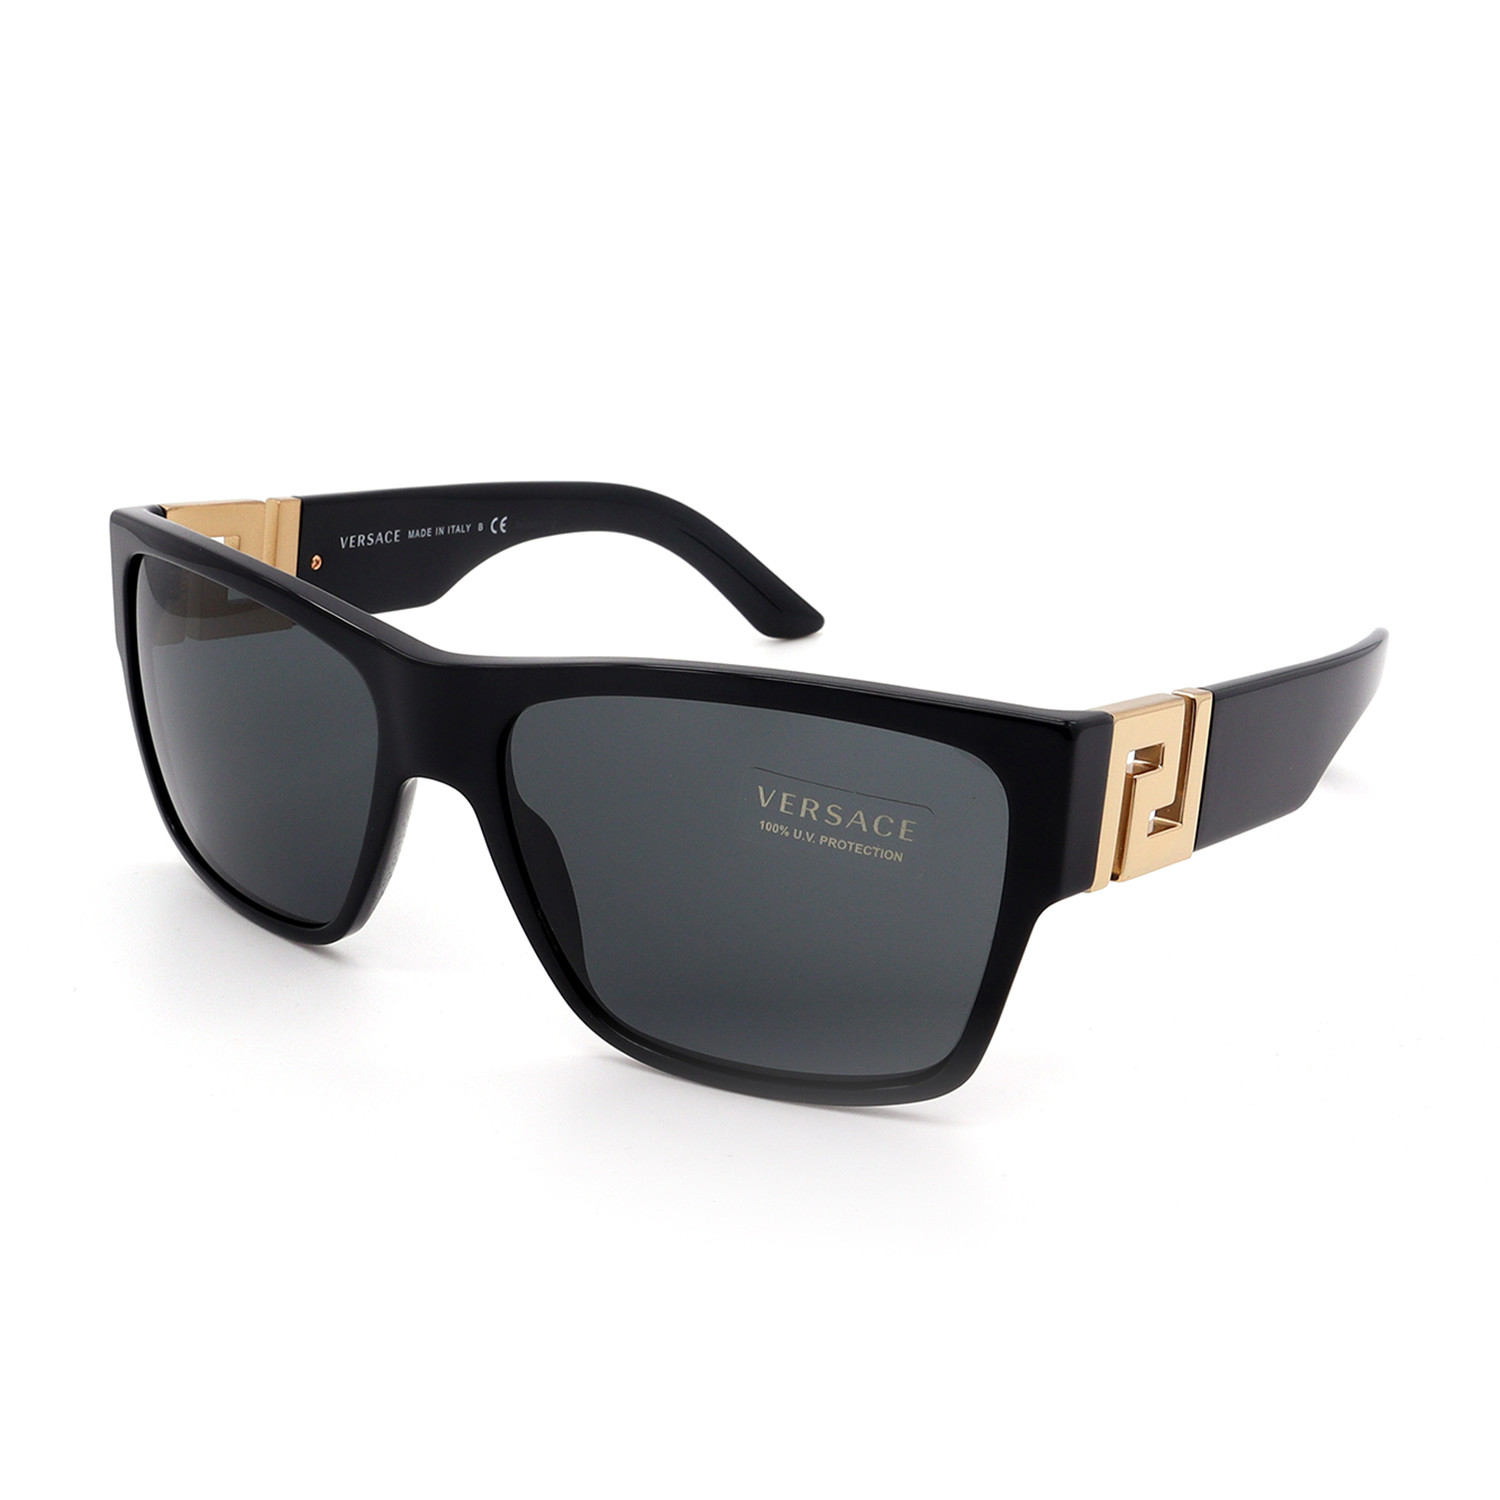 Mens Gv4296 Gb187 Square Sunglasses Shiny Black Gold Versace